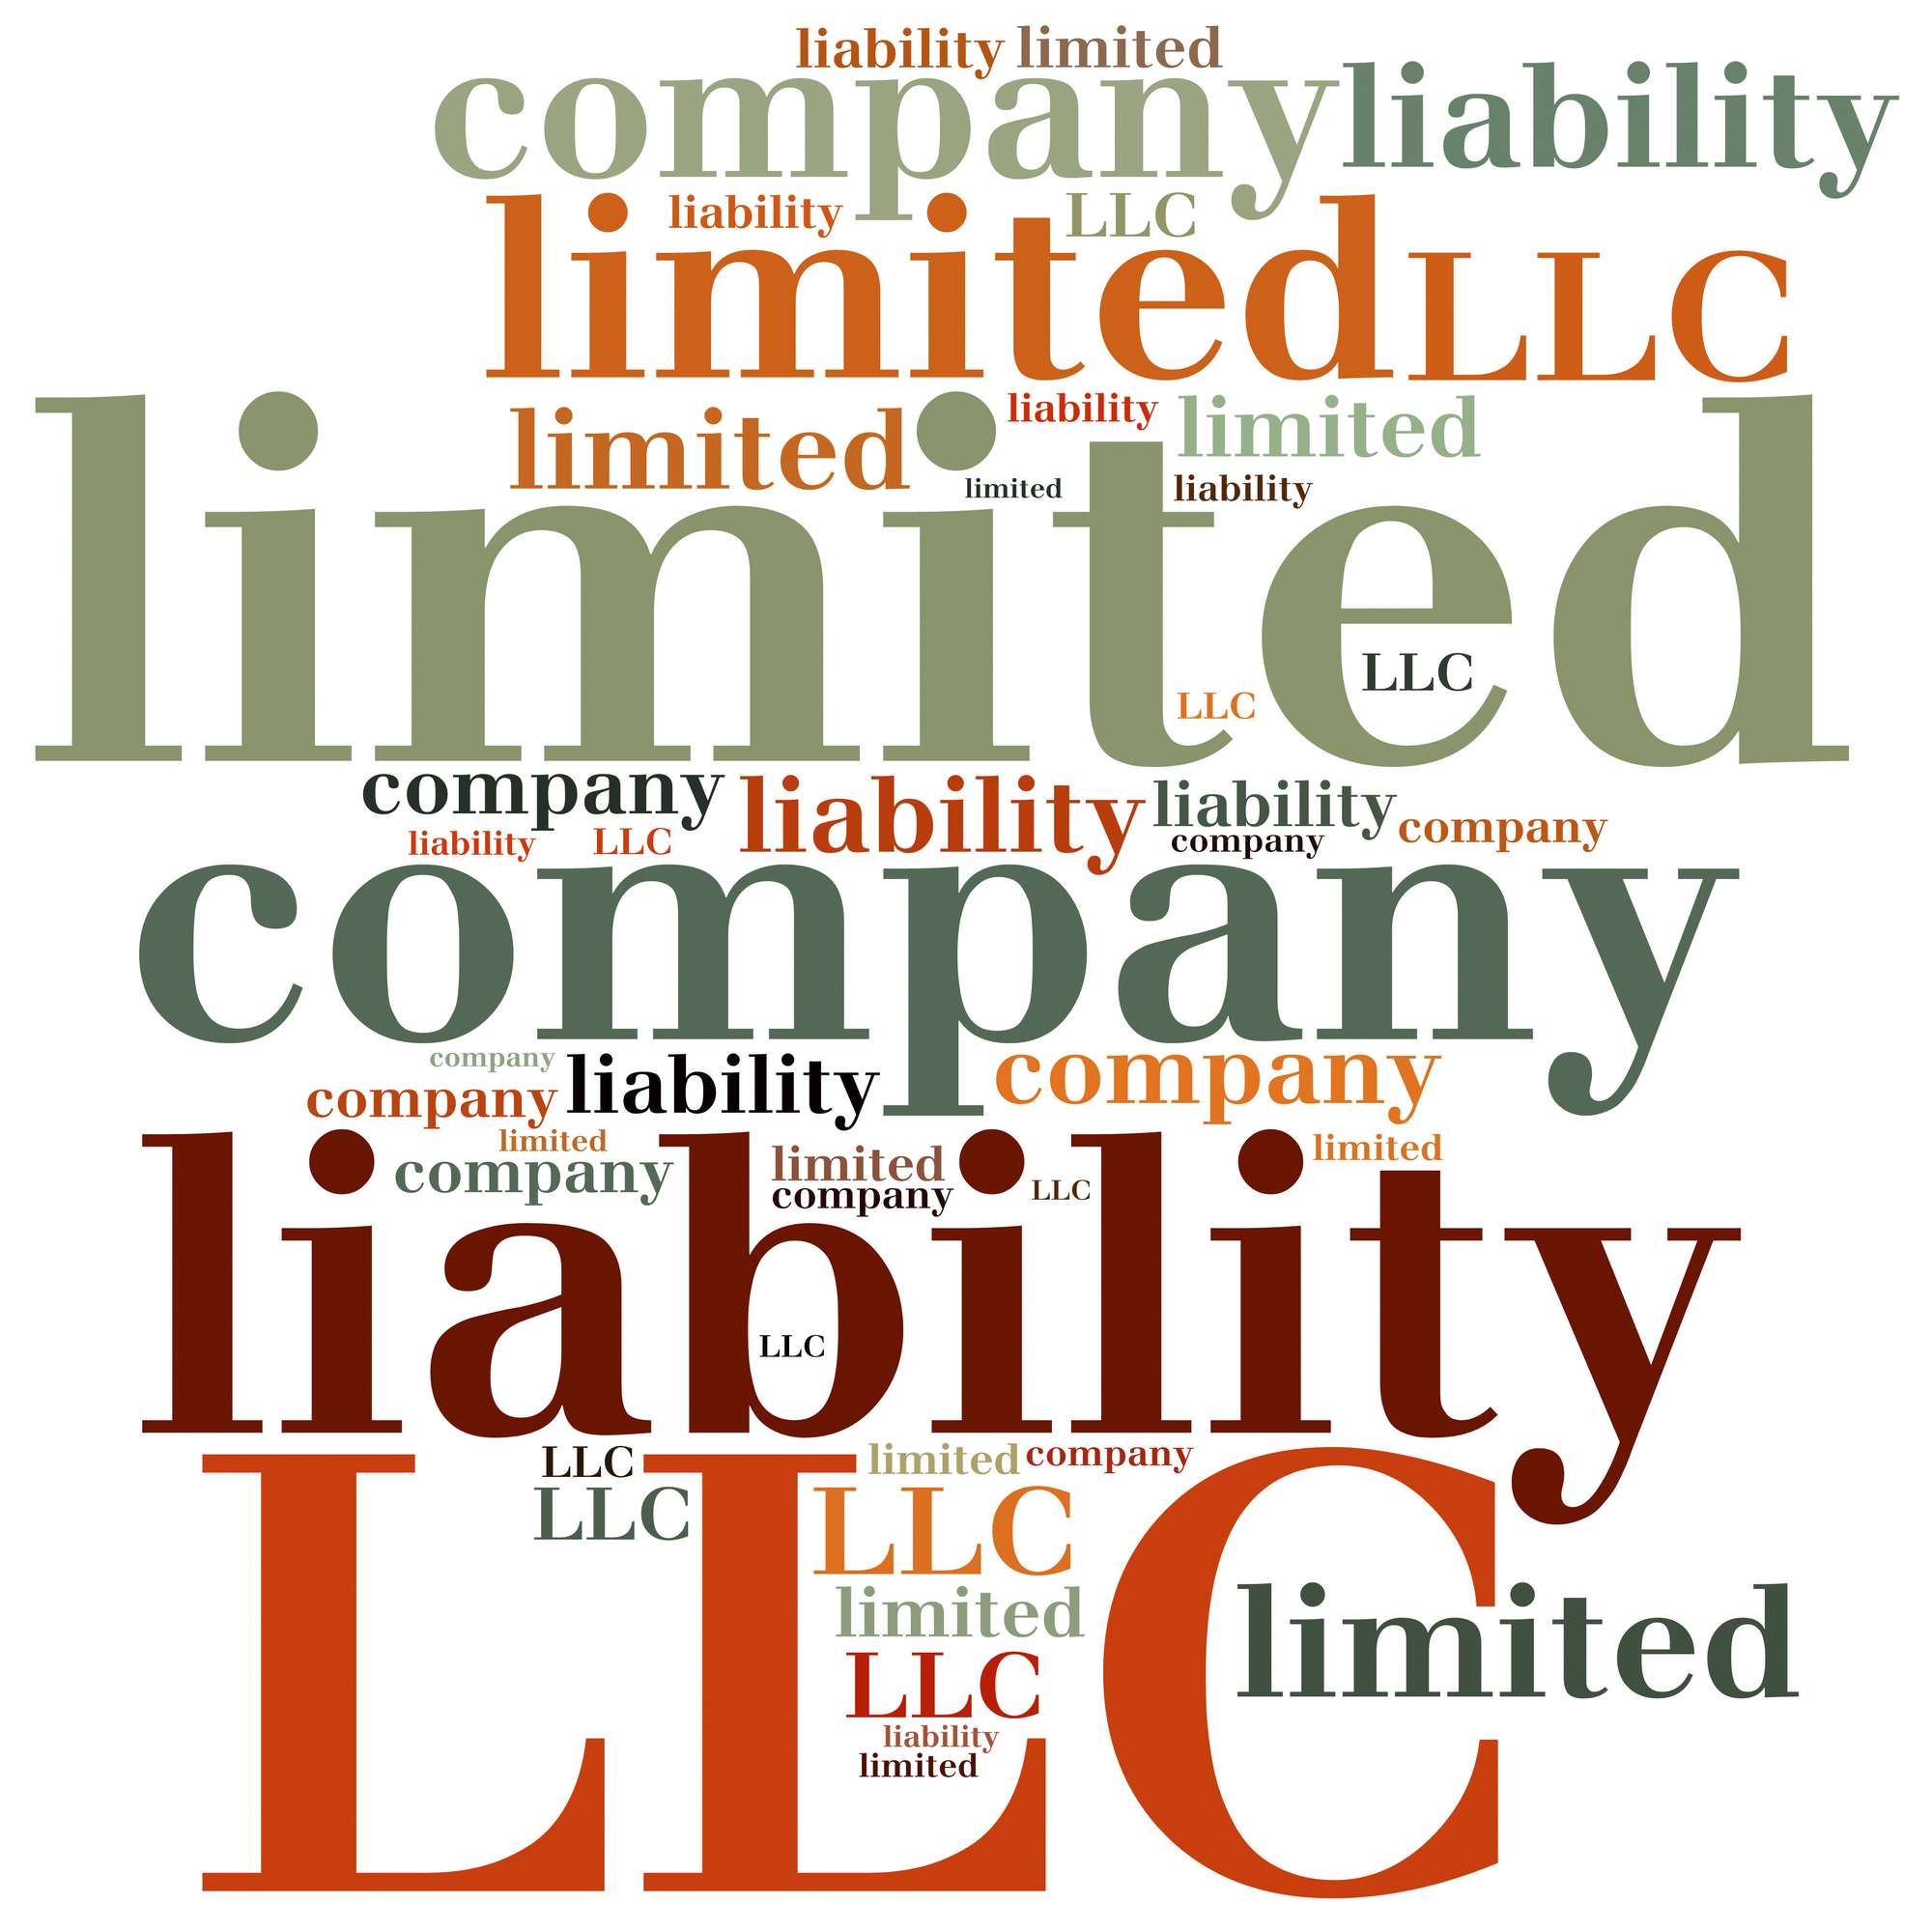 LLC. Limited liability company. Business abbreviation.